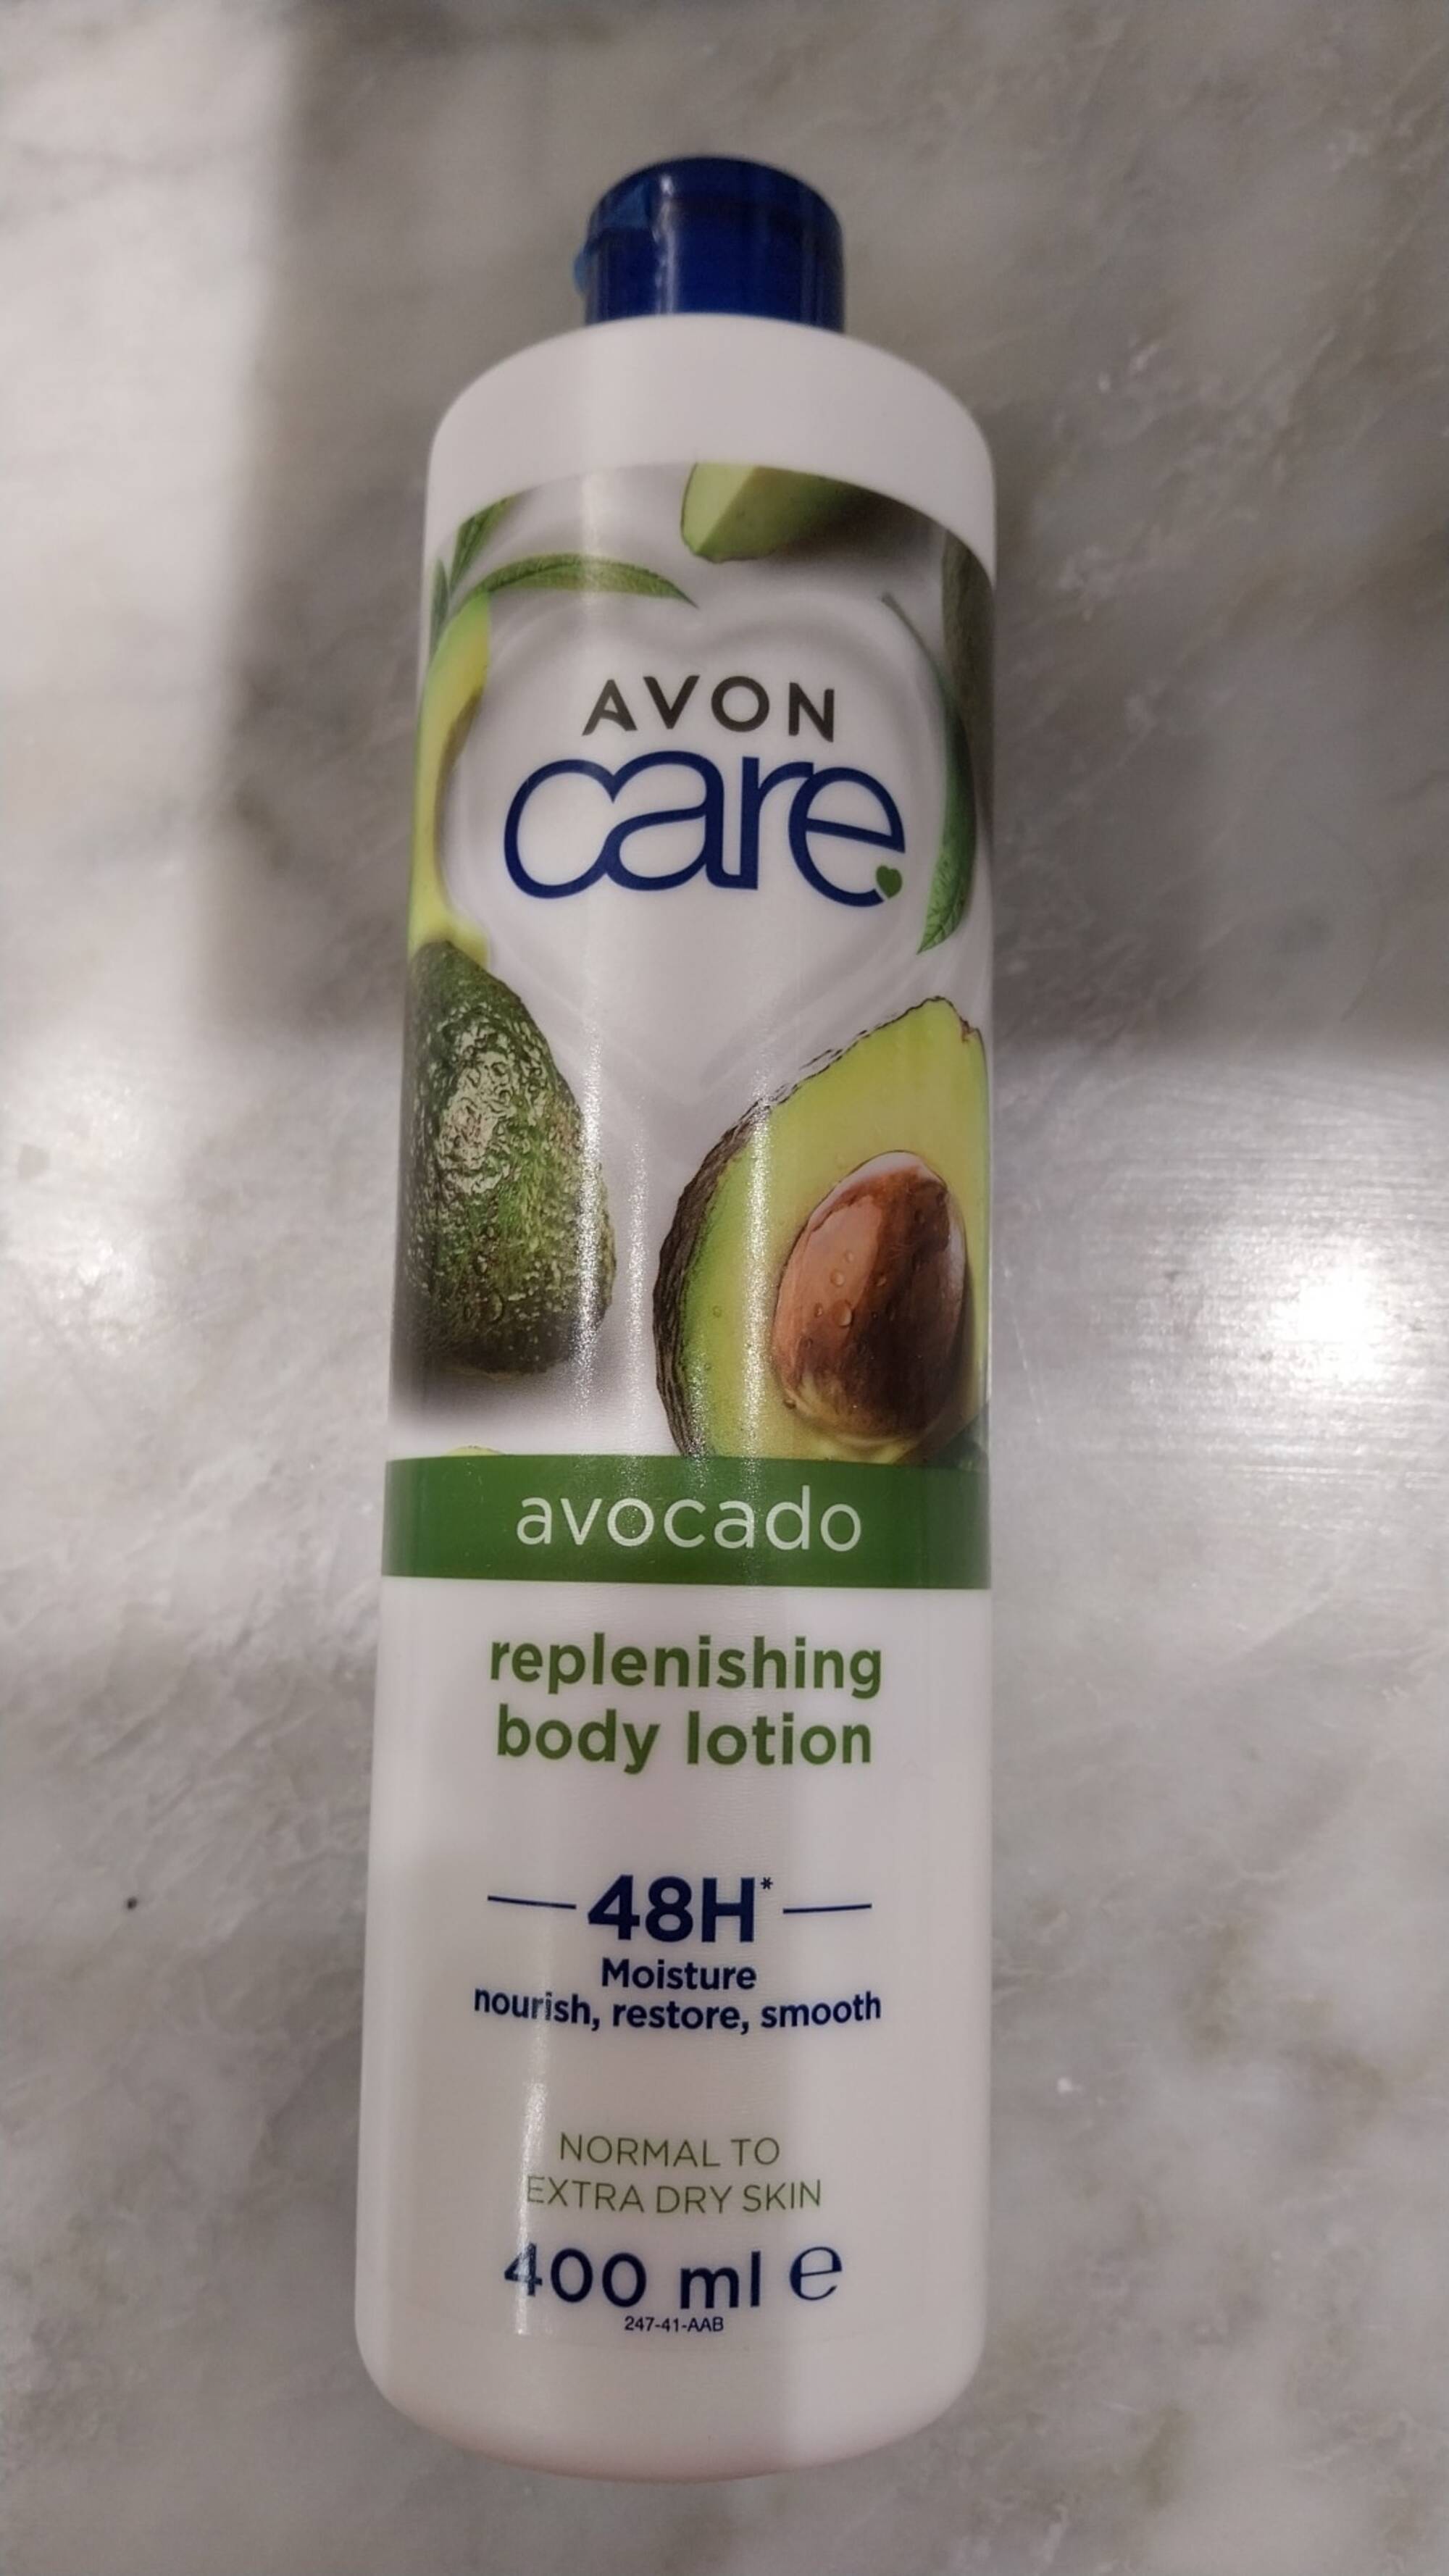 AVON CARE - Replenishing body lotion